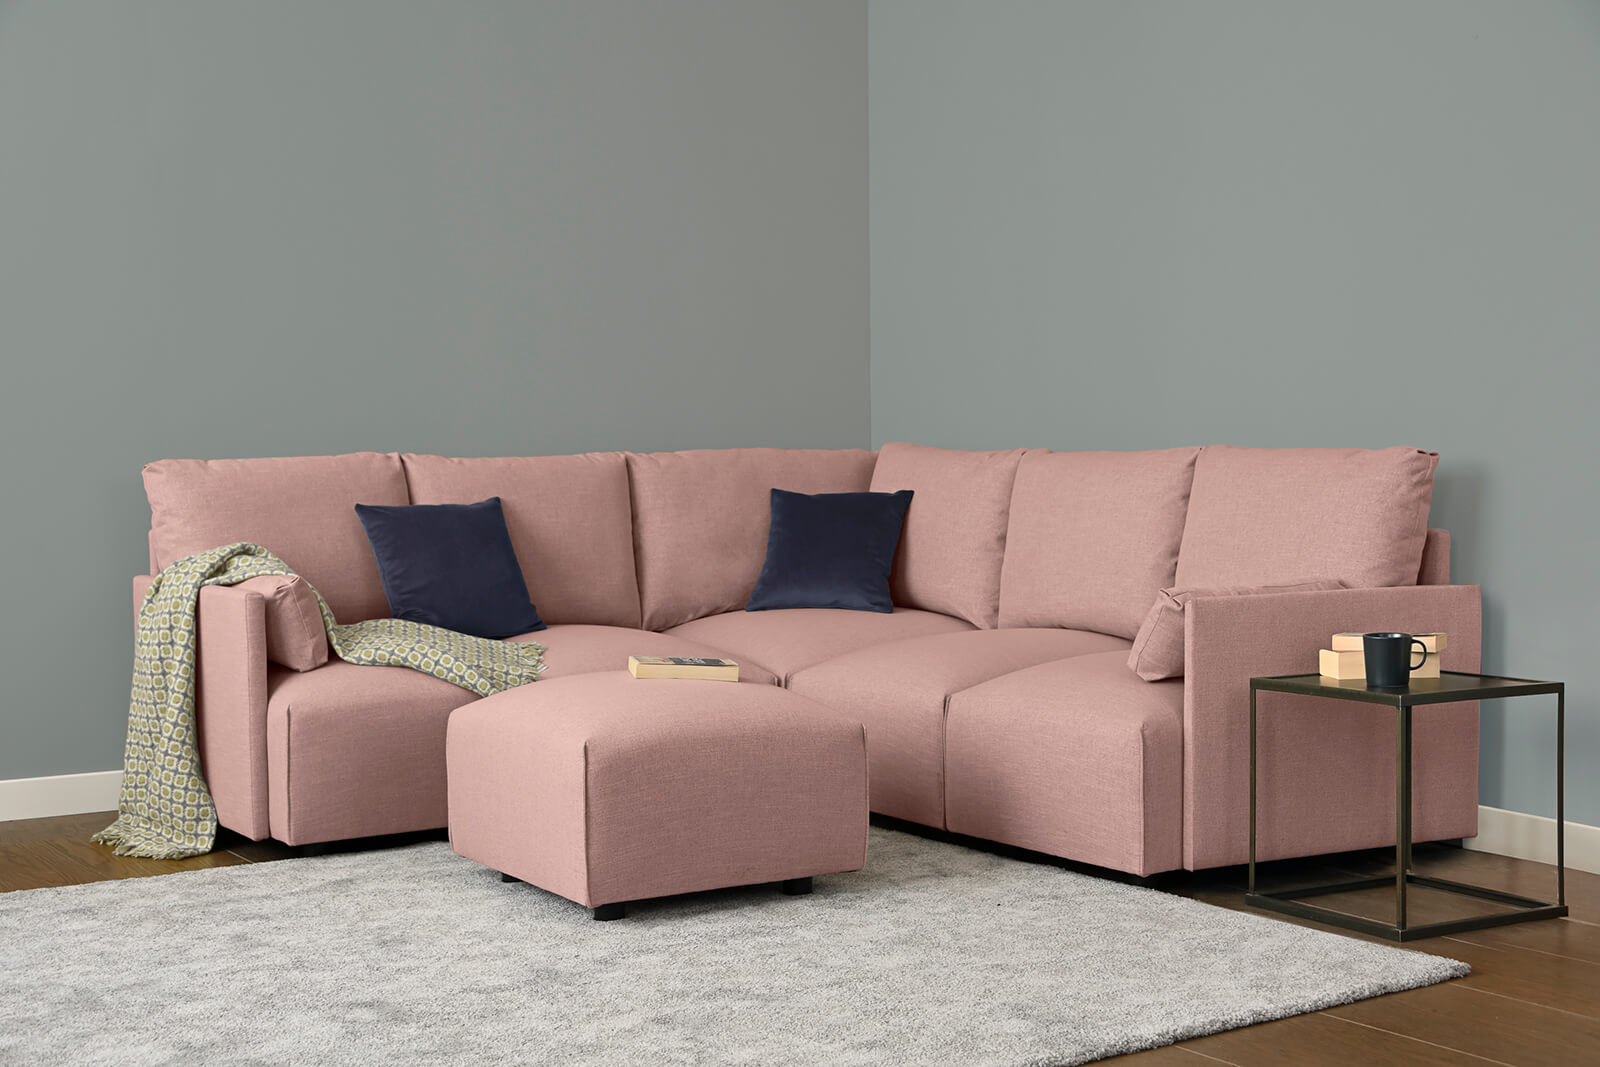 HB04-medium-corner-sofa-footstool-3q-rosewater-3x3-lifestyle